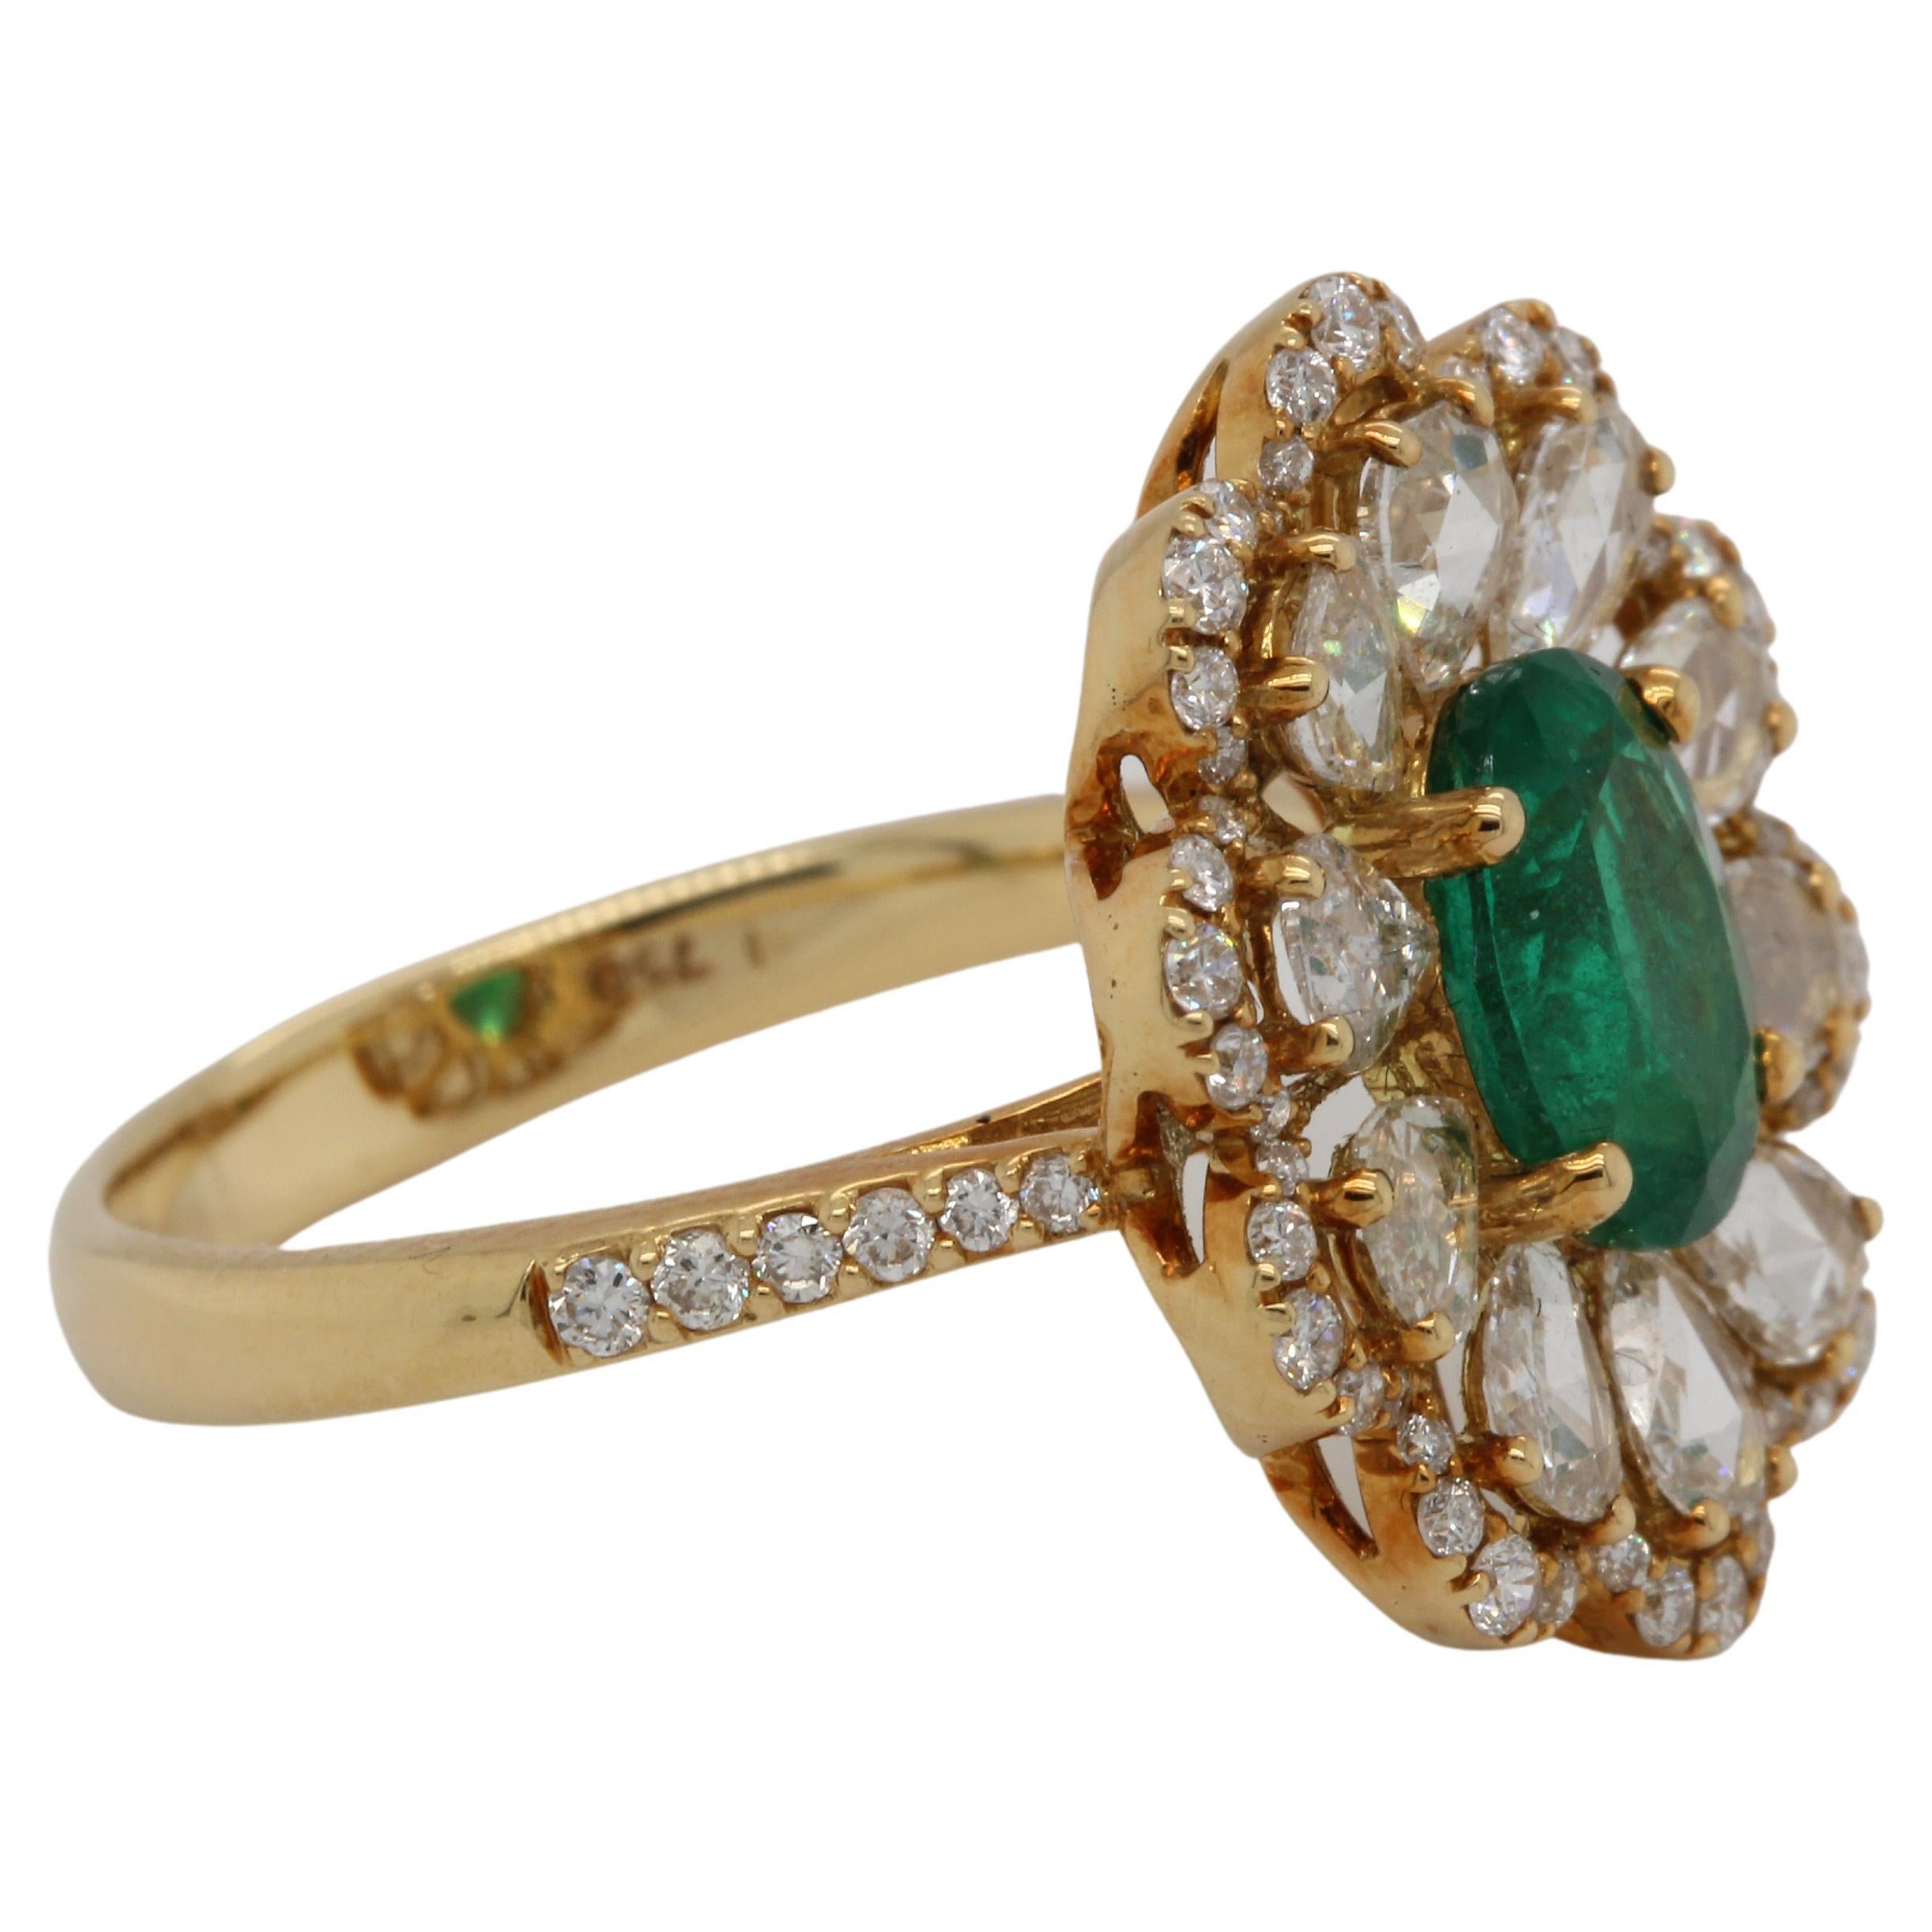 Oval Cut 1.38 Carat Emerald and Diamond Ring in 18 Karat Gold